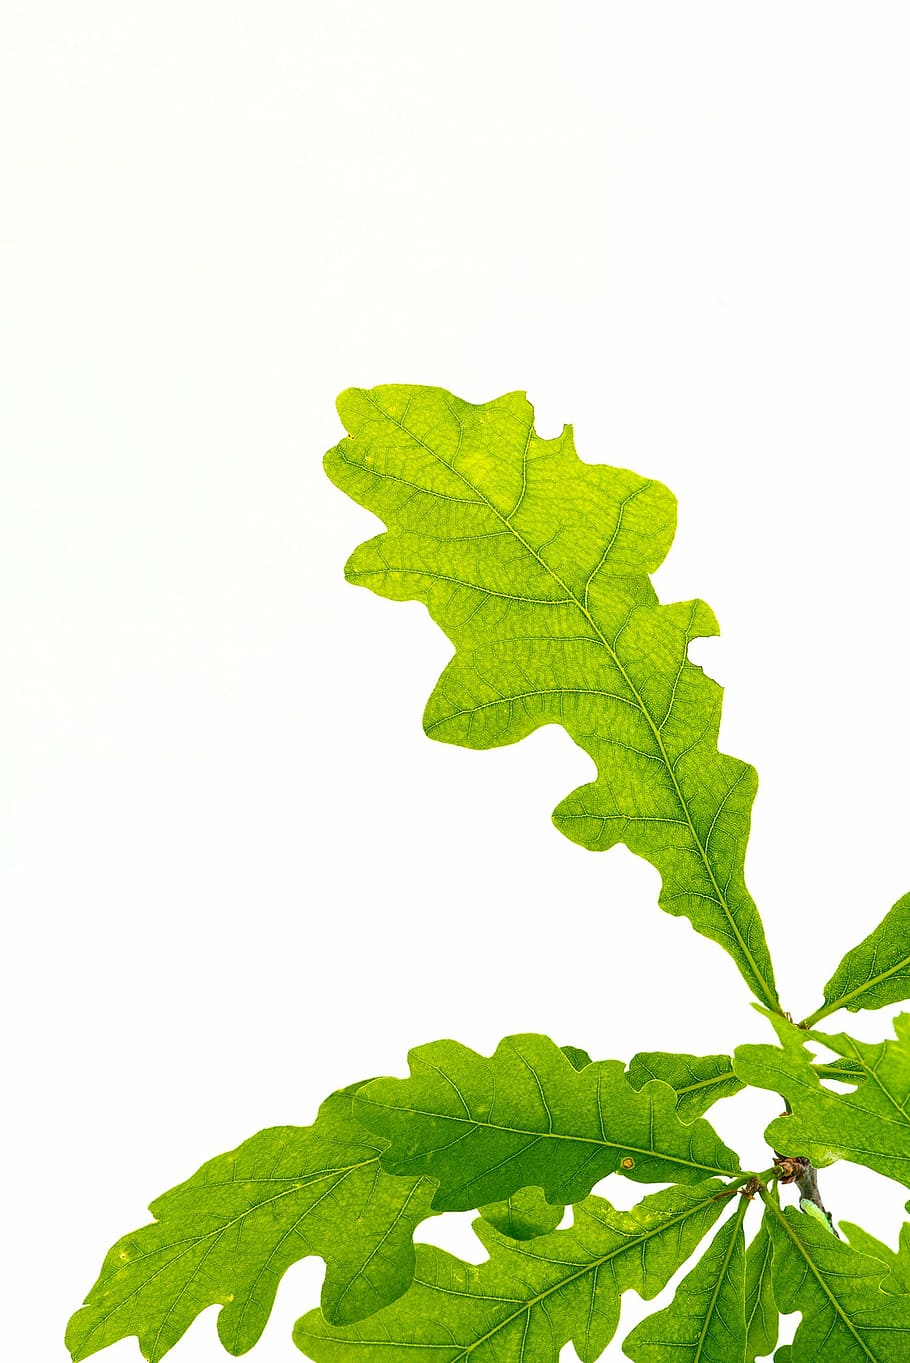 green leafed plant, leaves, oak leaves, leaf structure, tree leaf